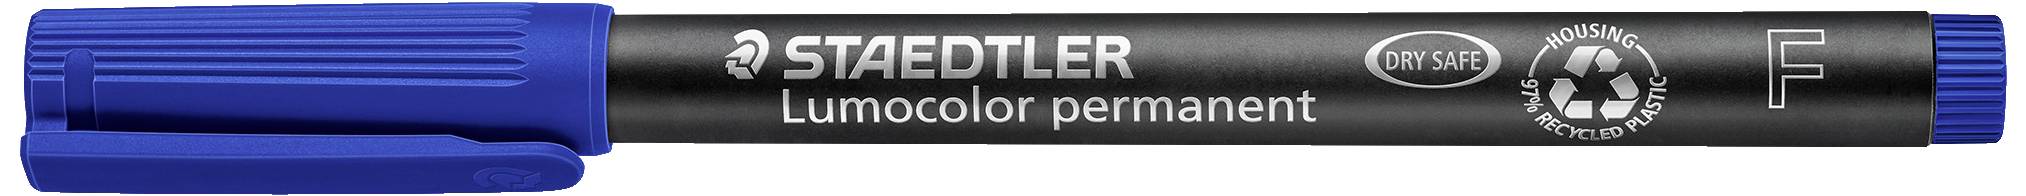 STAEDTLER Projektionsschreiber Lumocolor 318 perm